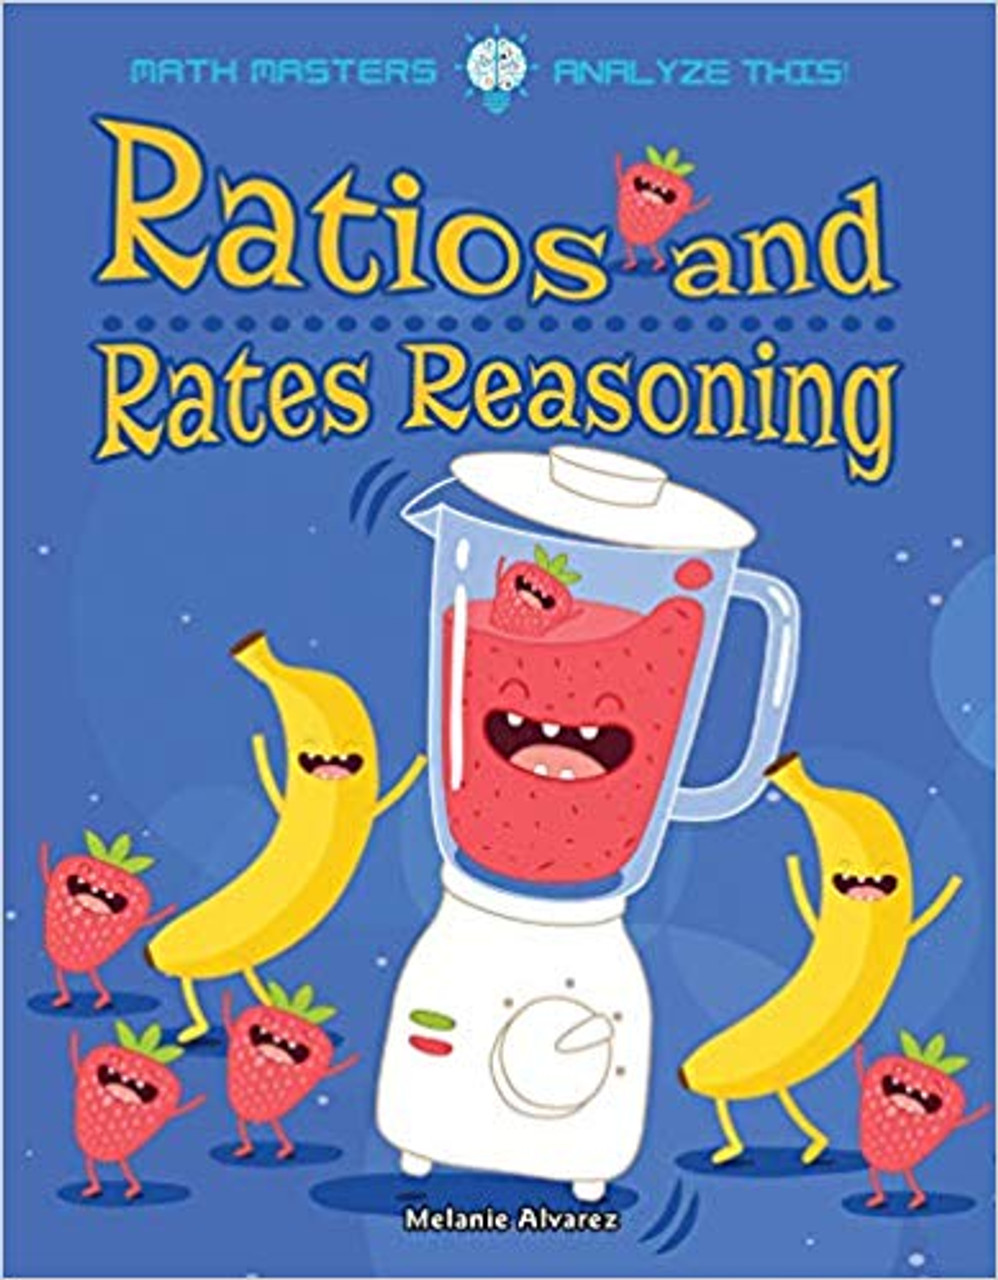 Ratios and Rates Reasoning by Melanie Alvarez